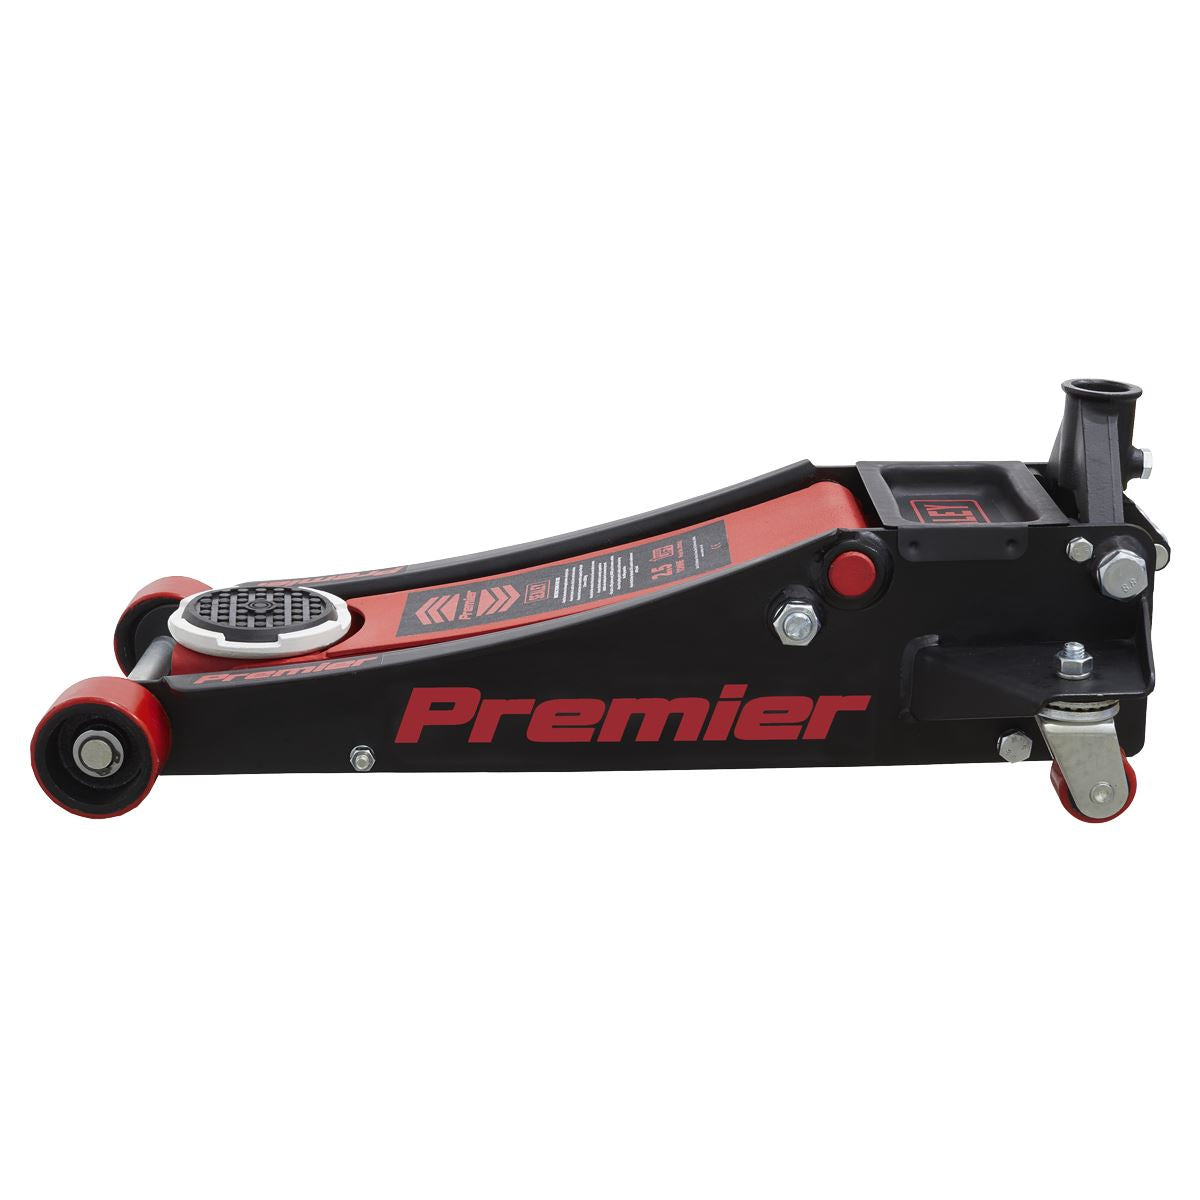 Sealey Premier Premier Low Profile with Rocket Lift Trolley Jack 2.5 Tonne